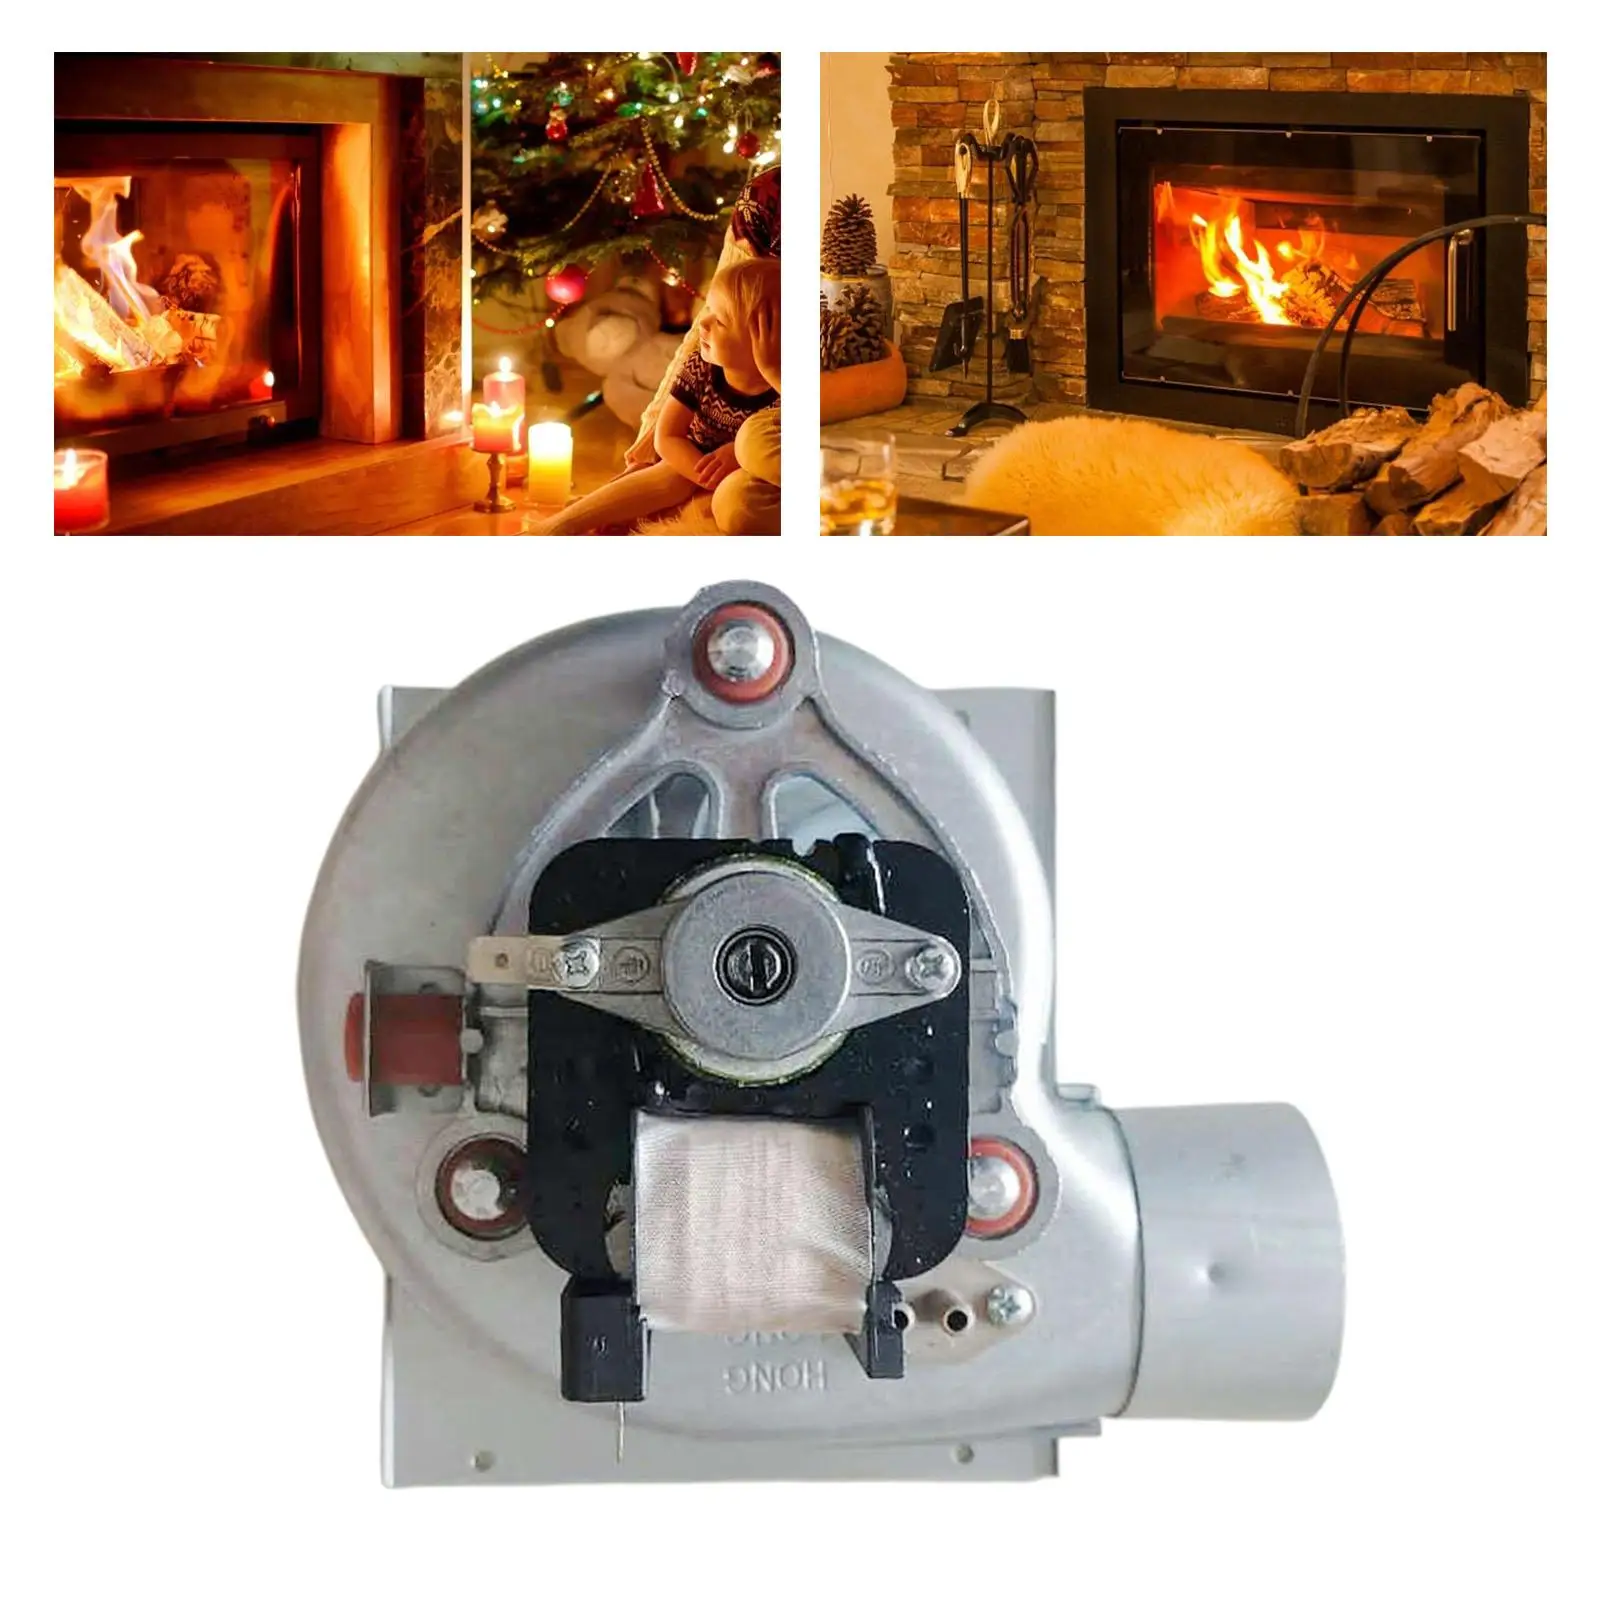 35W Furnace Centrifugal Blower Heat Dissipator Fan Iron Gear for Camping/Picnic/Outdoor Acativities